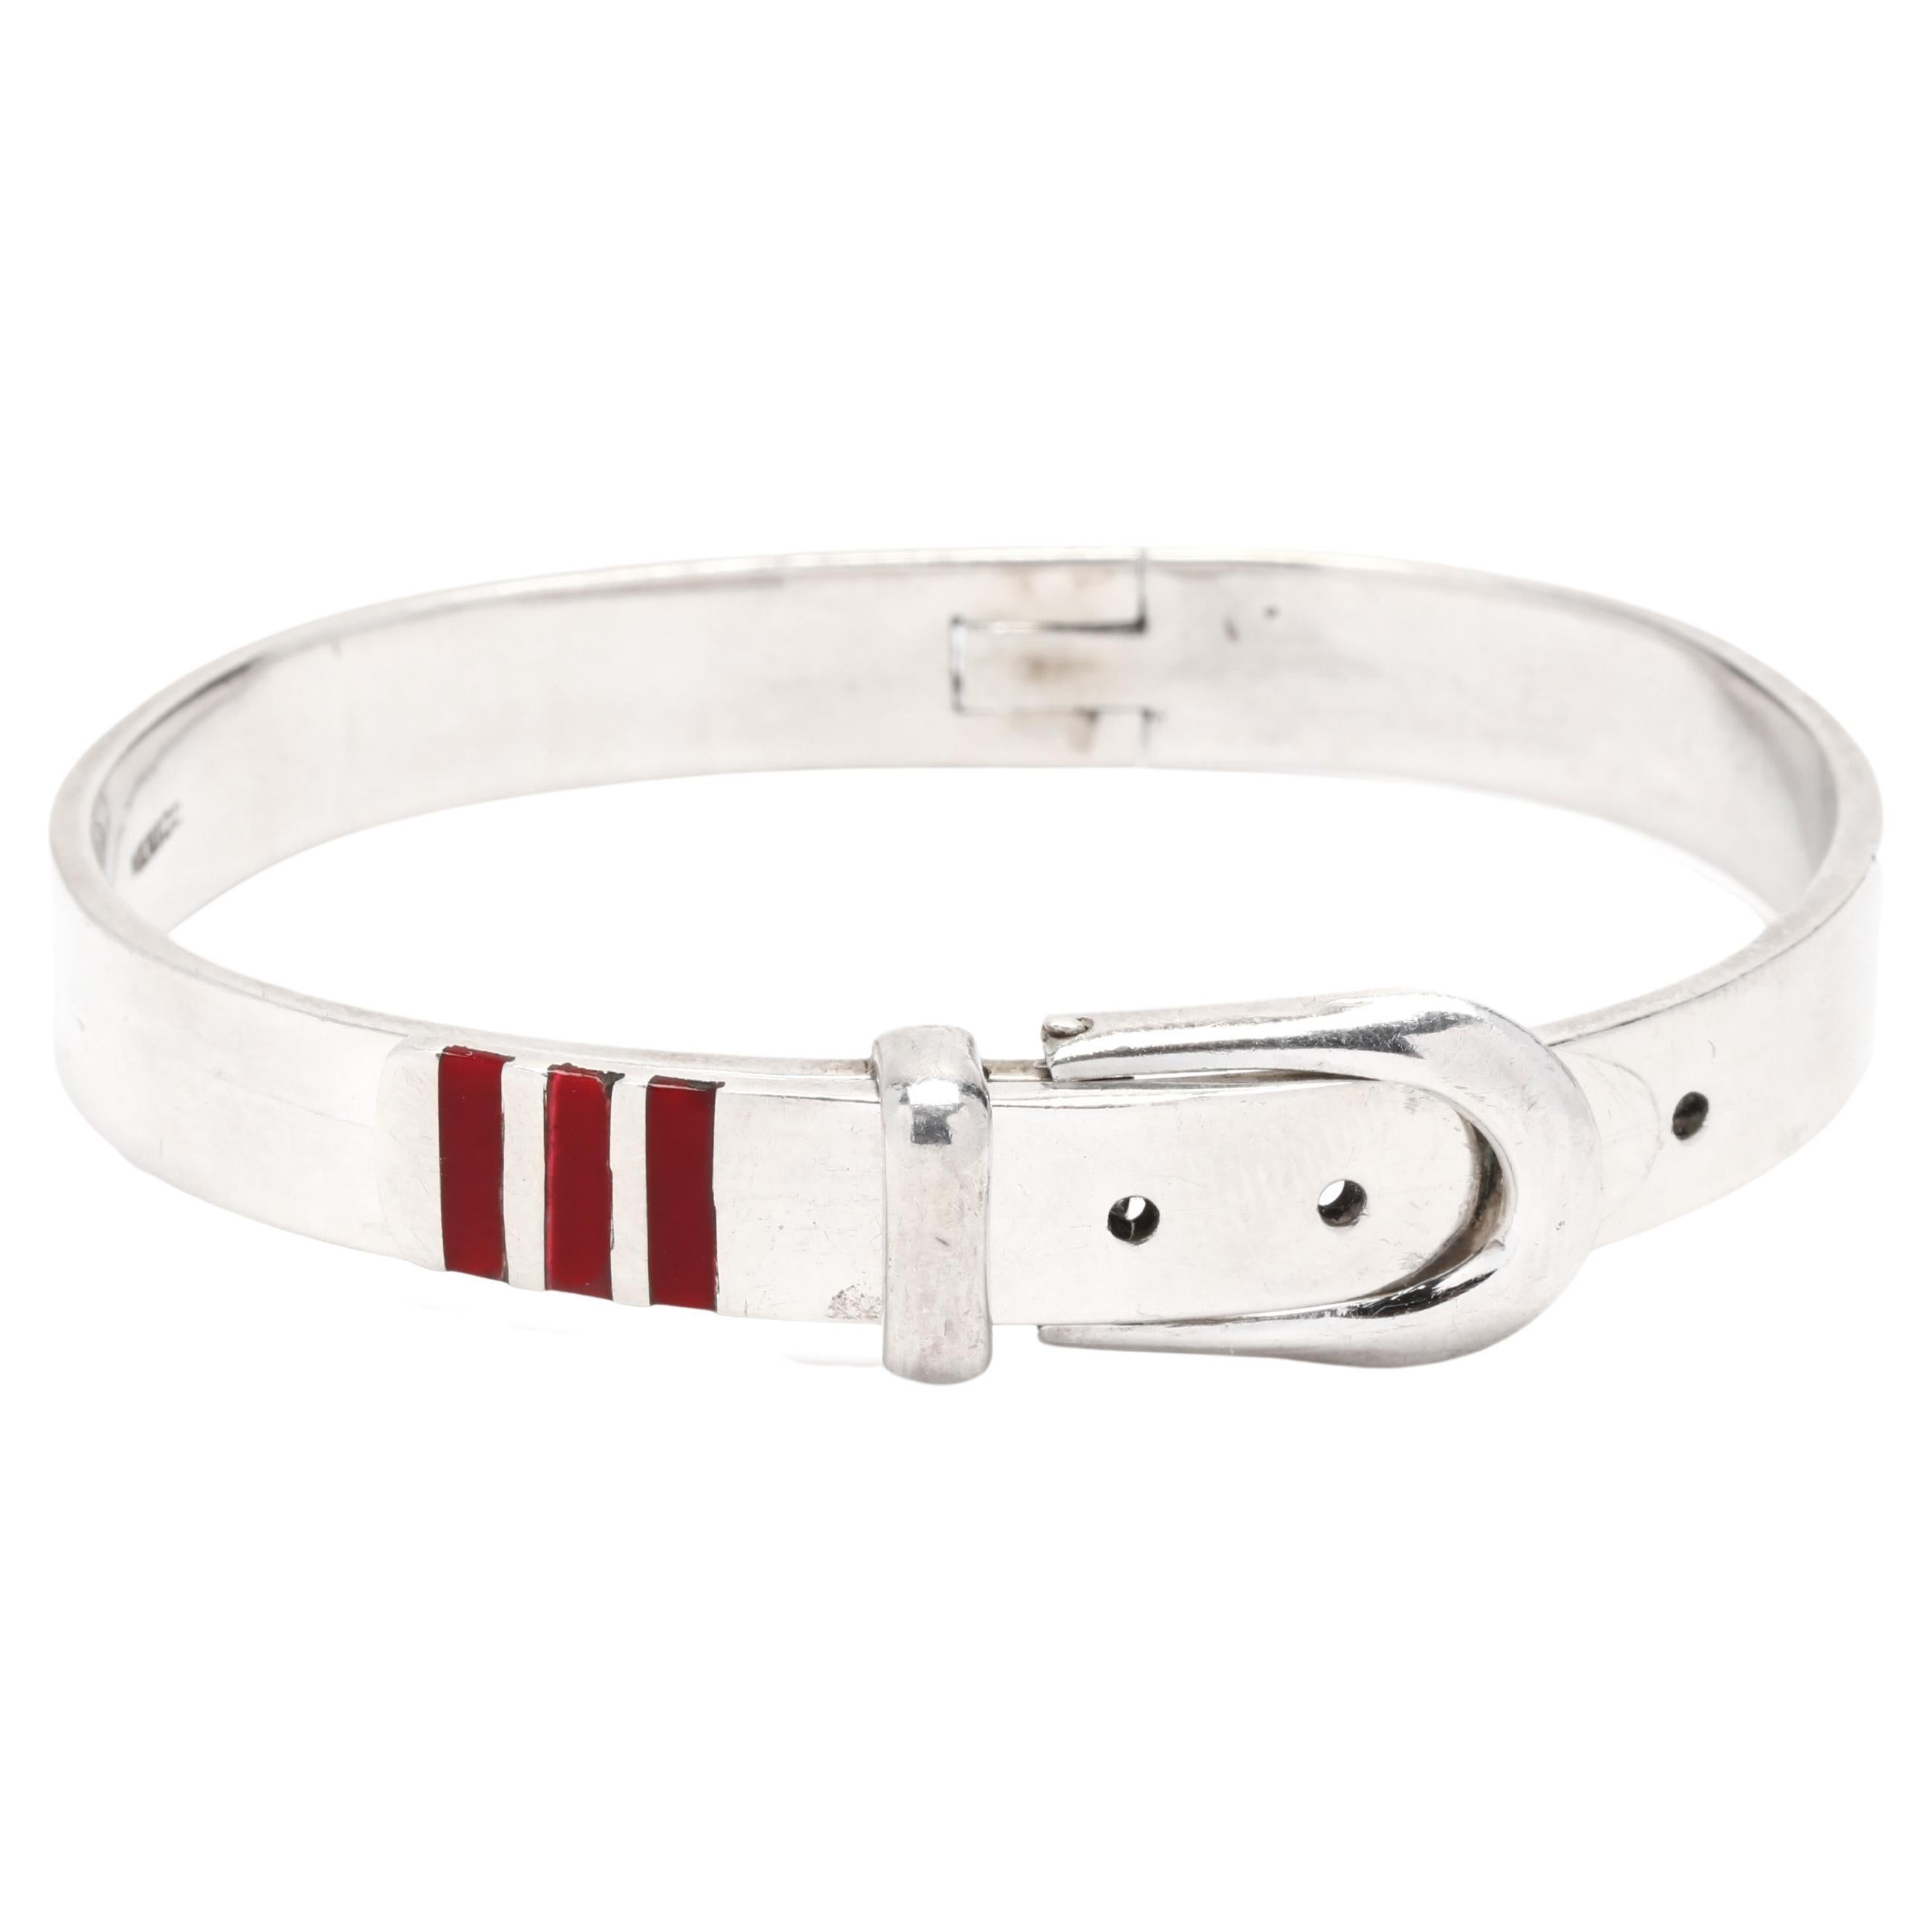 Red Enamel Belt Buckle Bracelet, Sterling Silver, Length 7.5 Inch, Simple Buckle For Sale